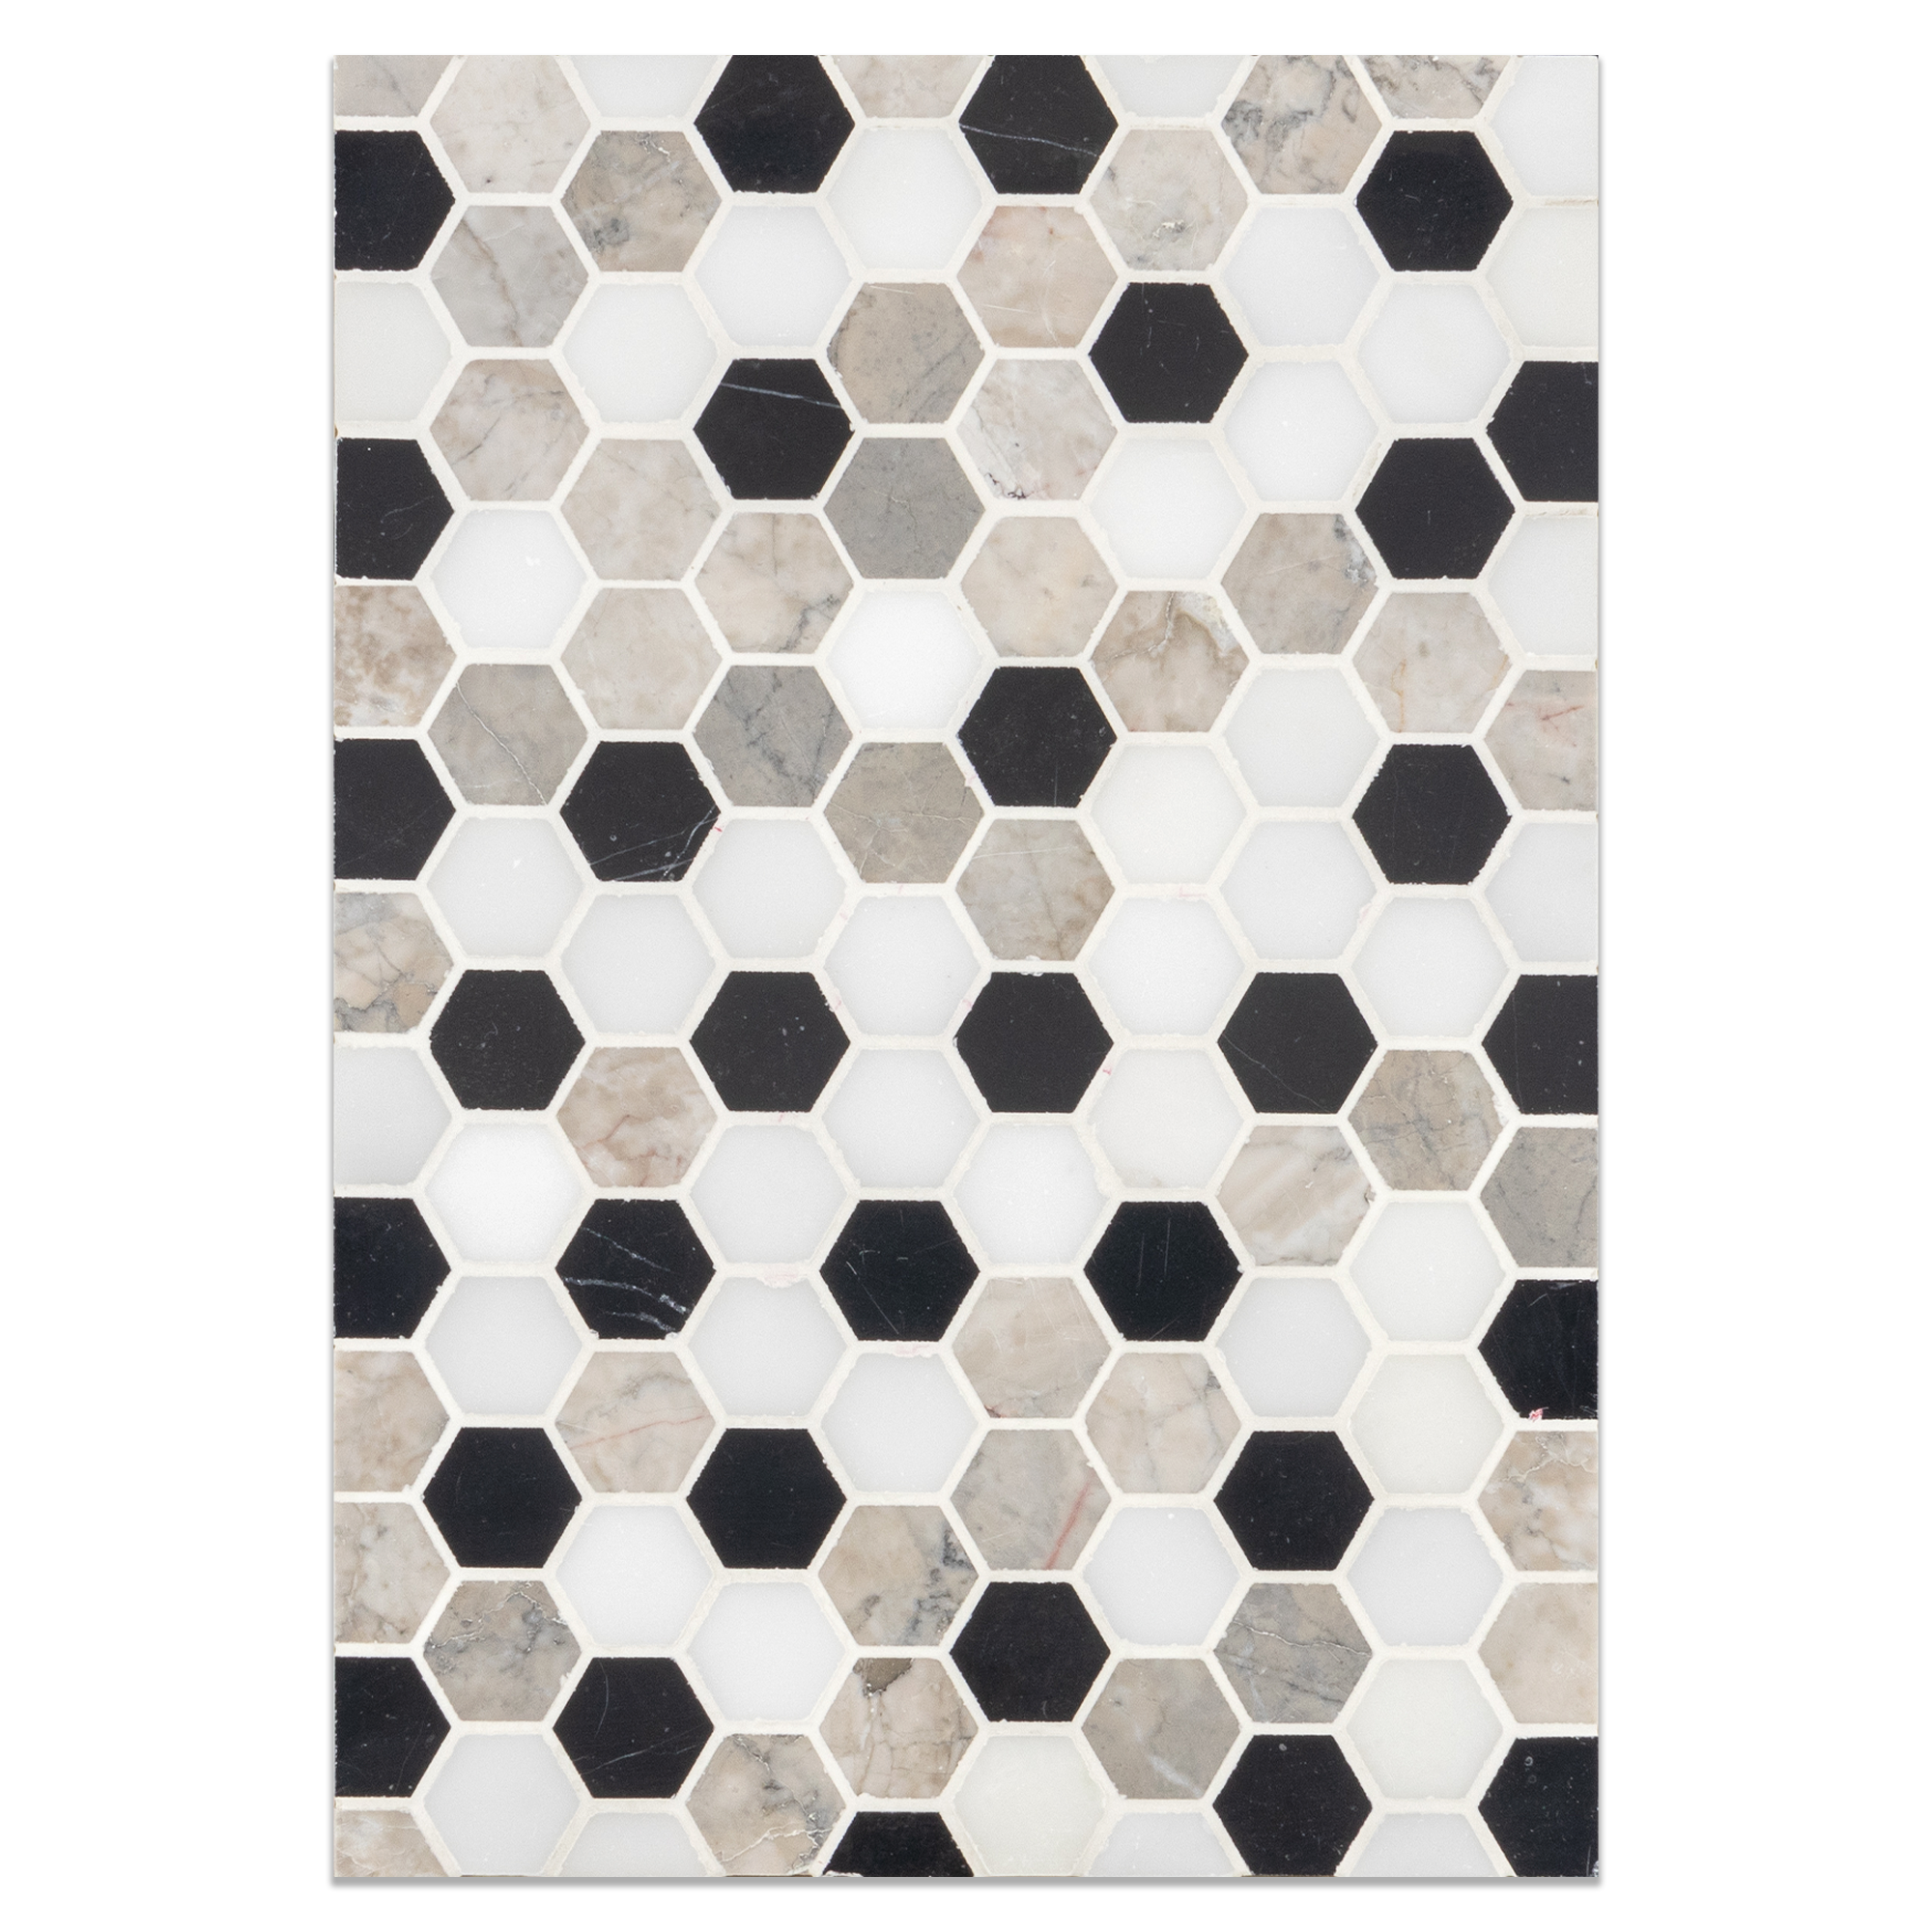 1 1/4" Hexagon Mosaic Boards